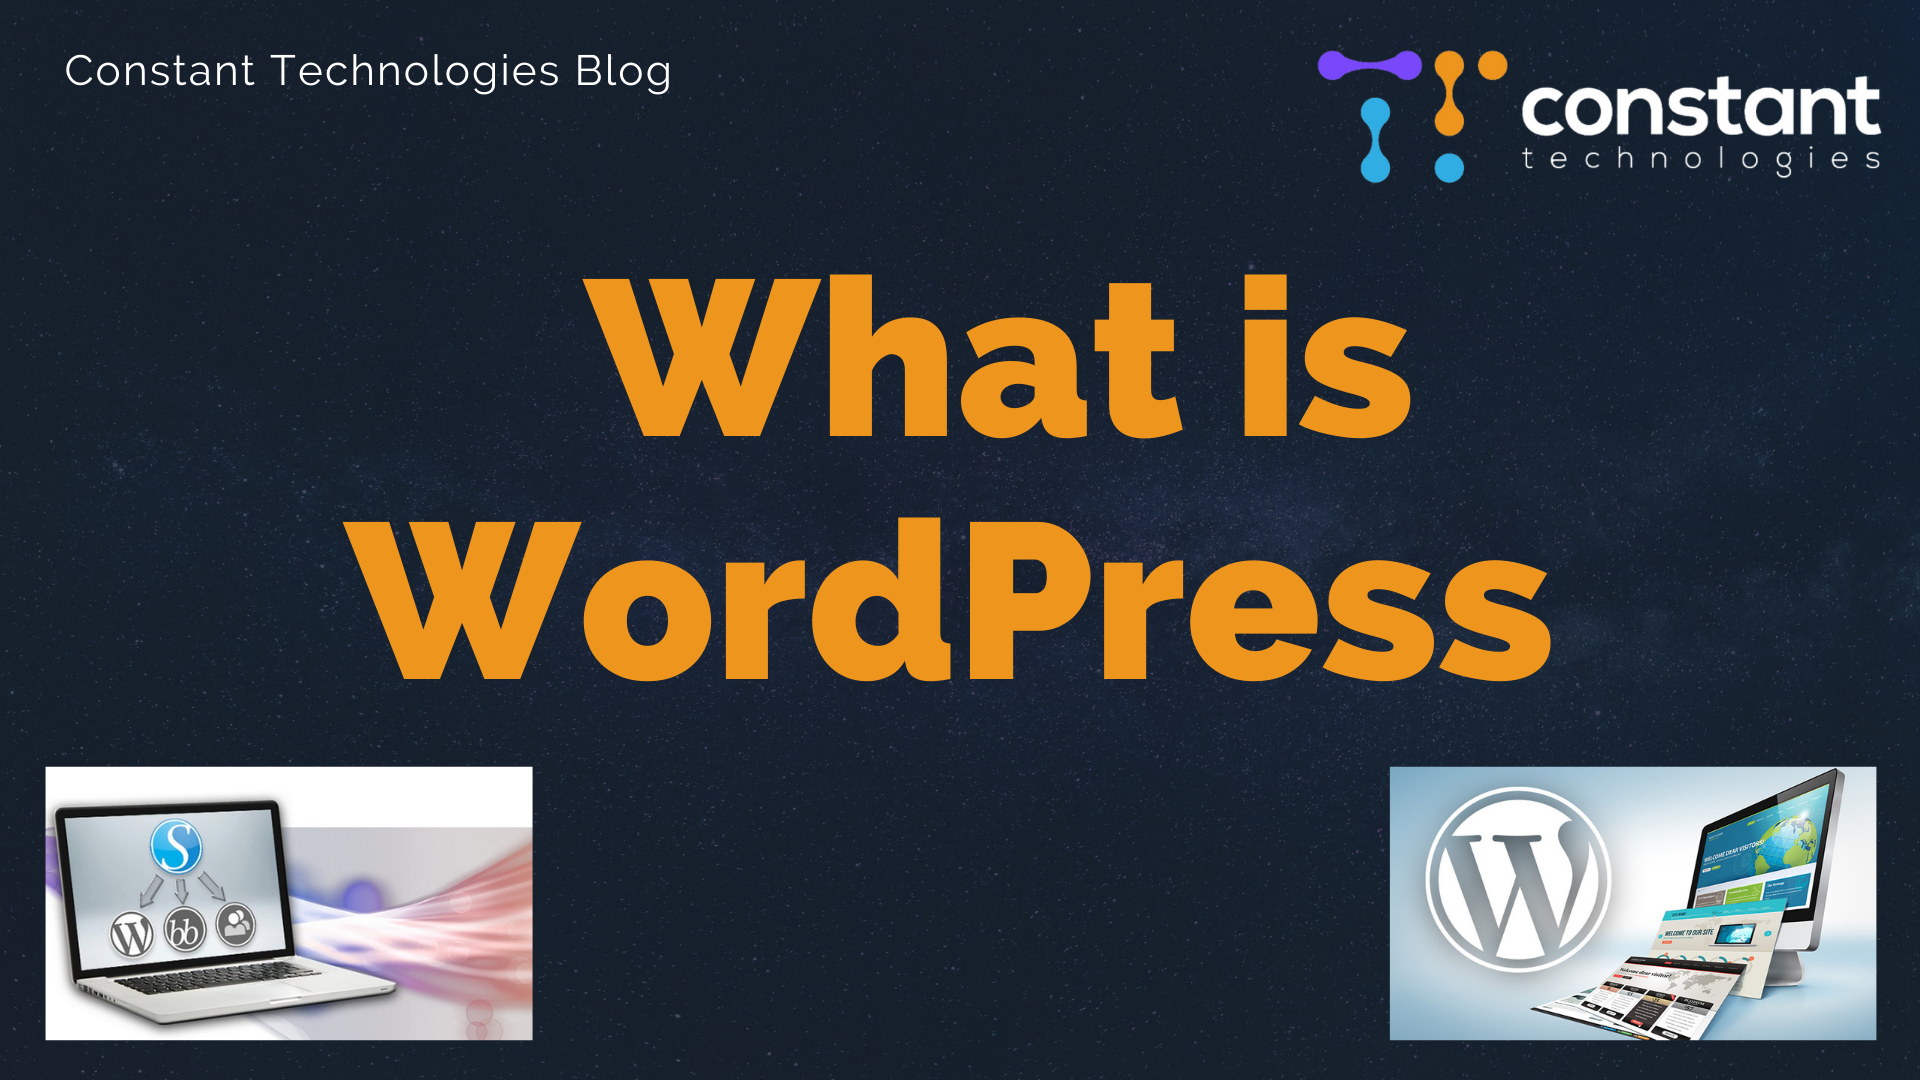 "What is WordPress"